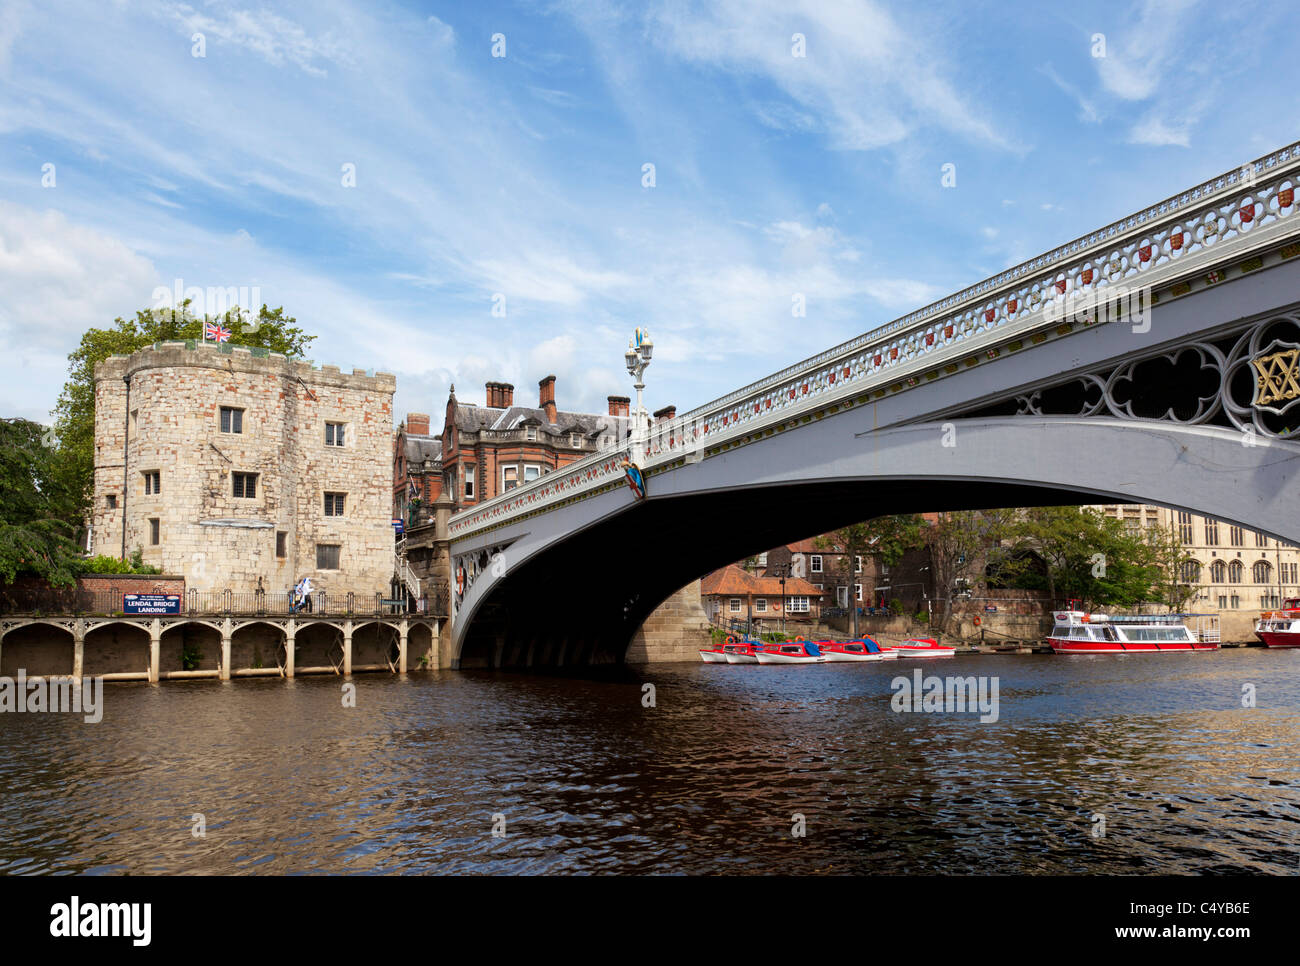 Lendal ponte sul fiume Ouse città di York Yorkshire Inghilterra GB UK EU Europe Foto Stock